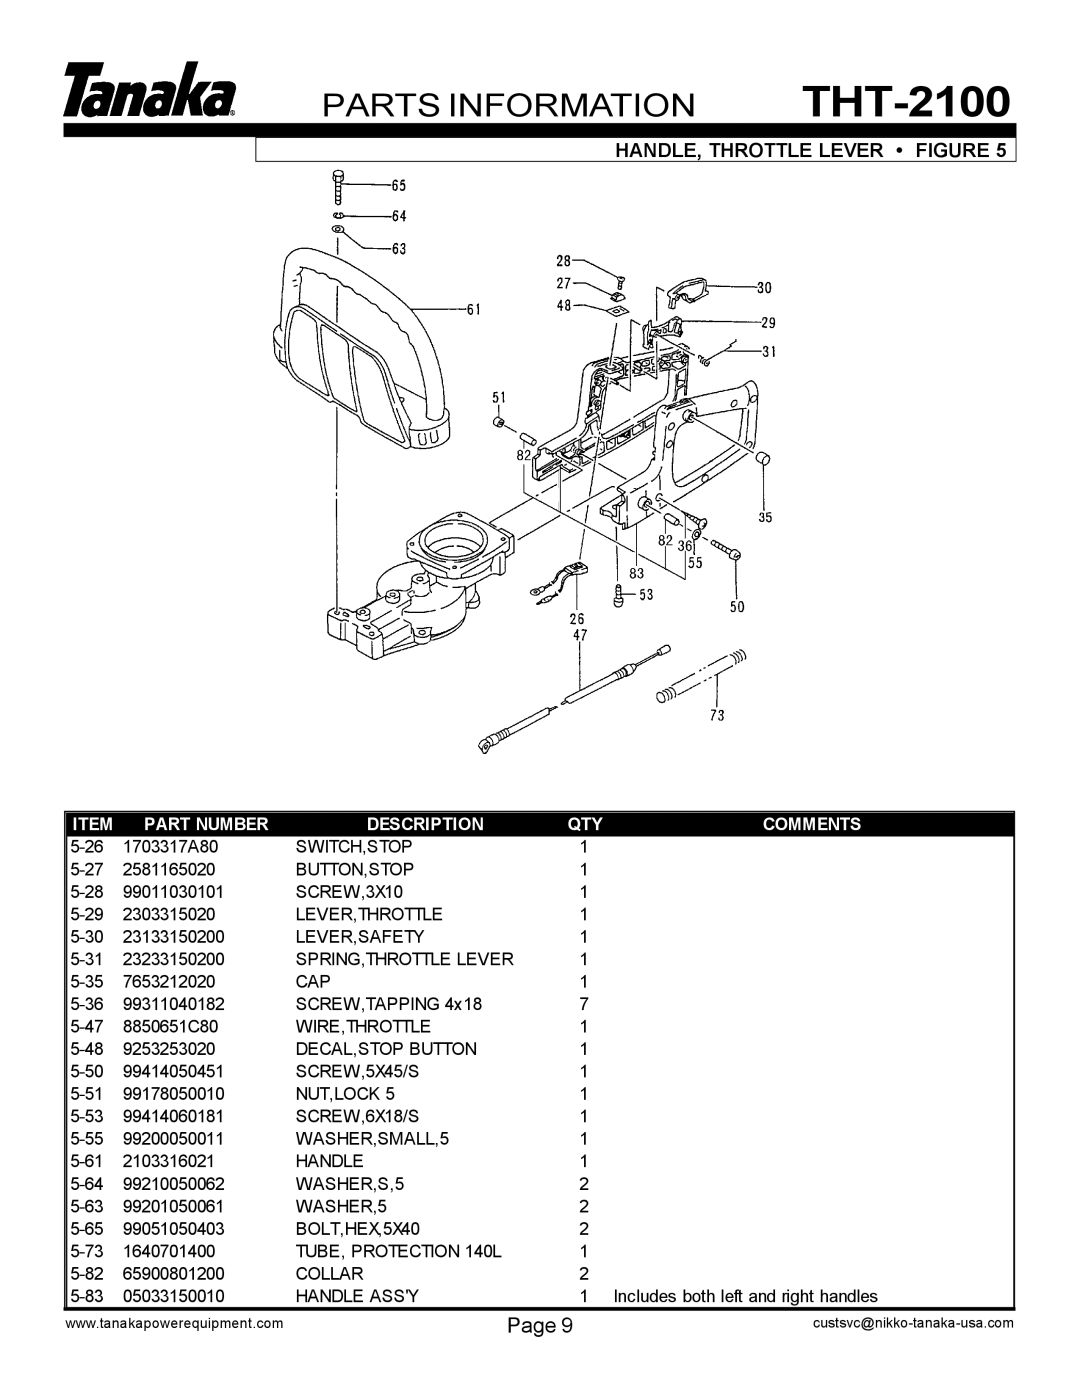 Tanaka manual THT-2100, Parts Information, Handle, Throttle Lever Figure, Part Number, Description, Comments 